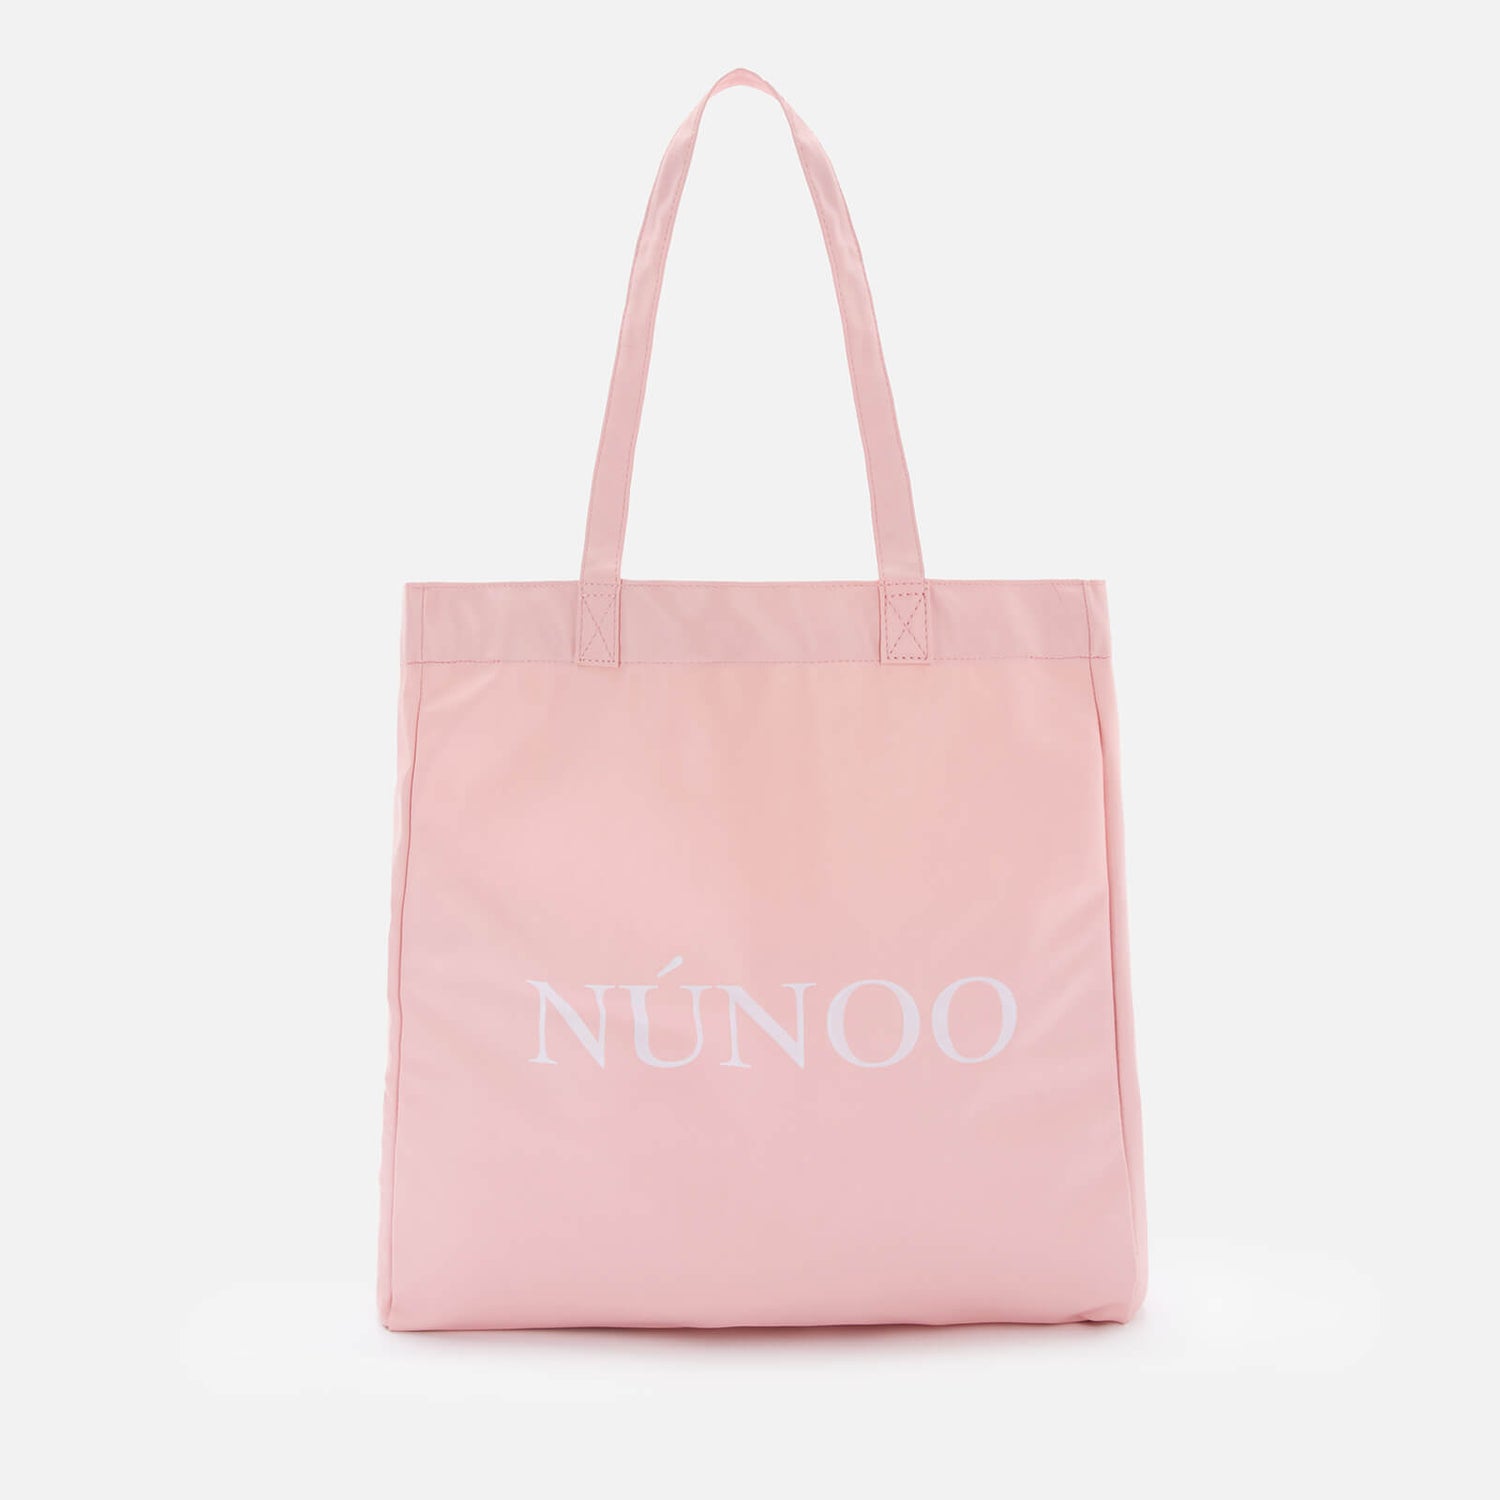 Núnoo Women's Big Tote Bag - Pink